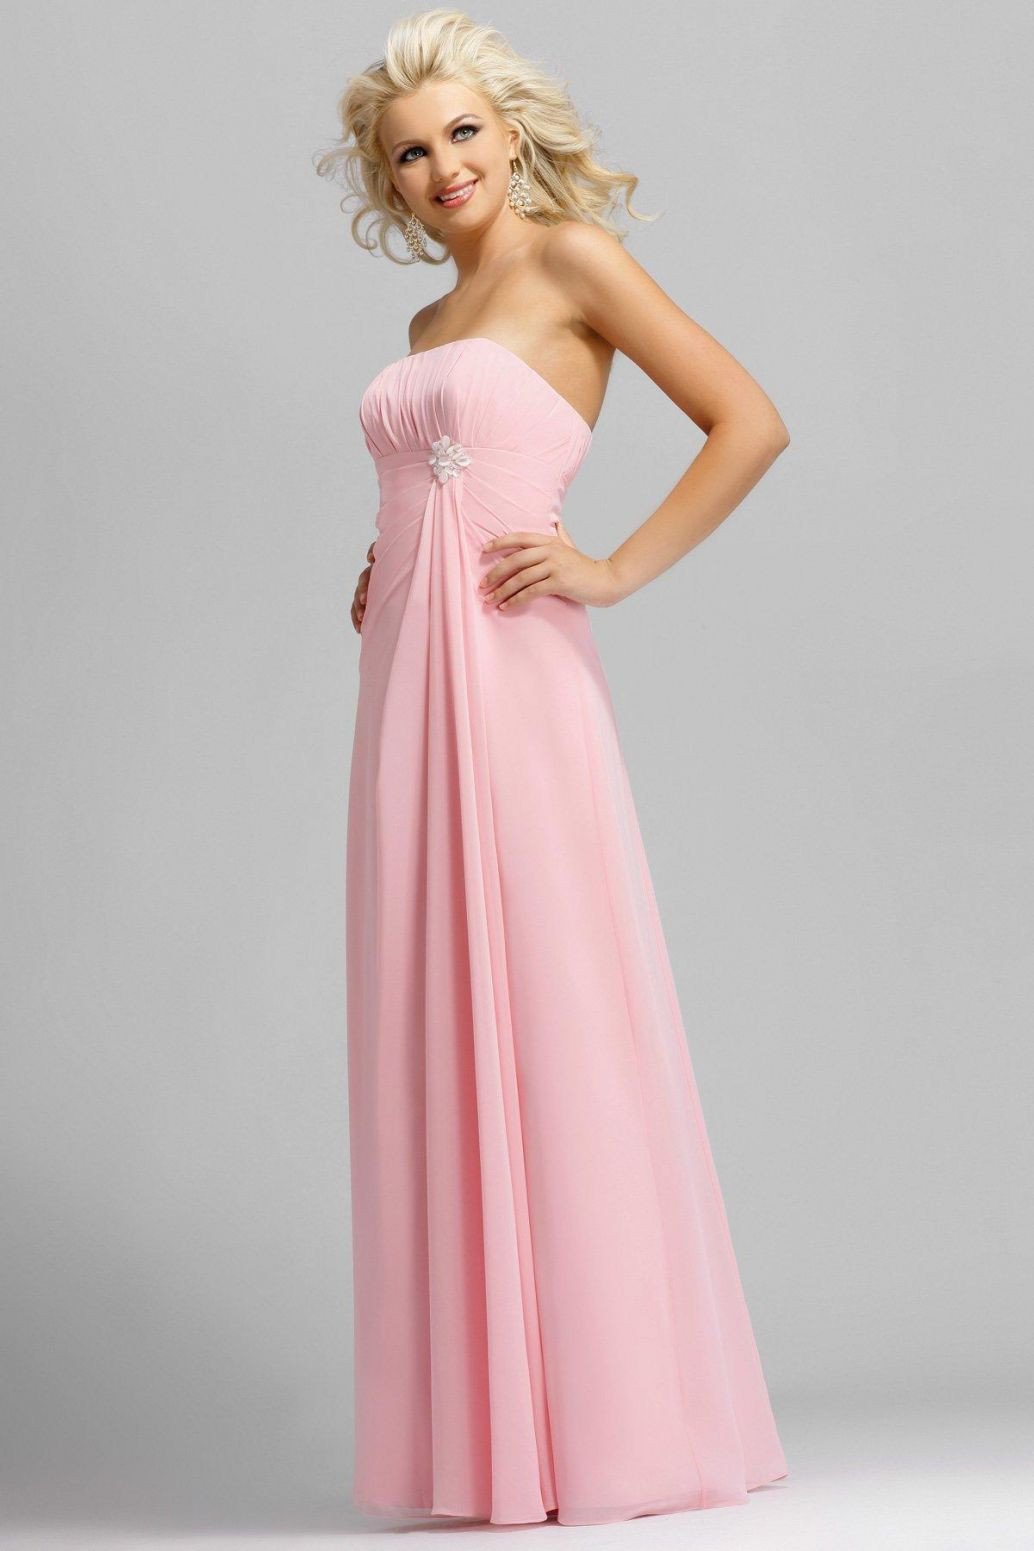 Pics Of Wedding Dresses
 Long Bright Pink Bridesmaid Dress Designs Wedding Dress